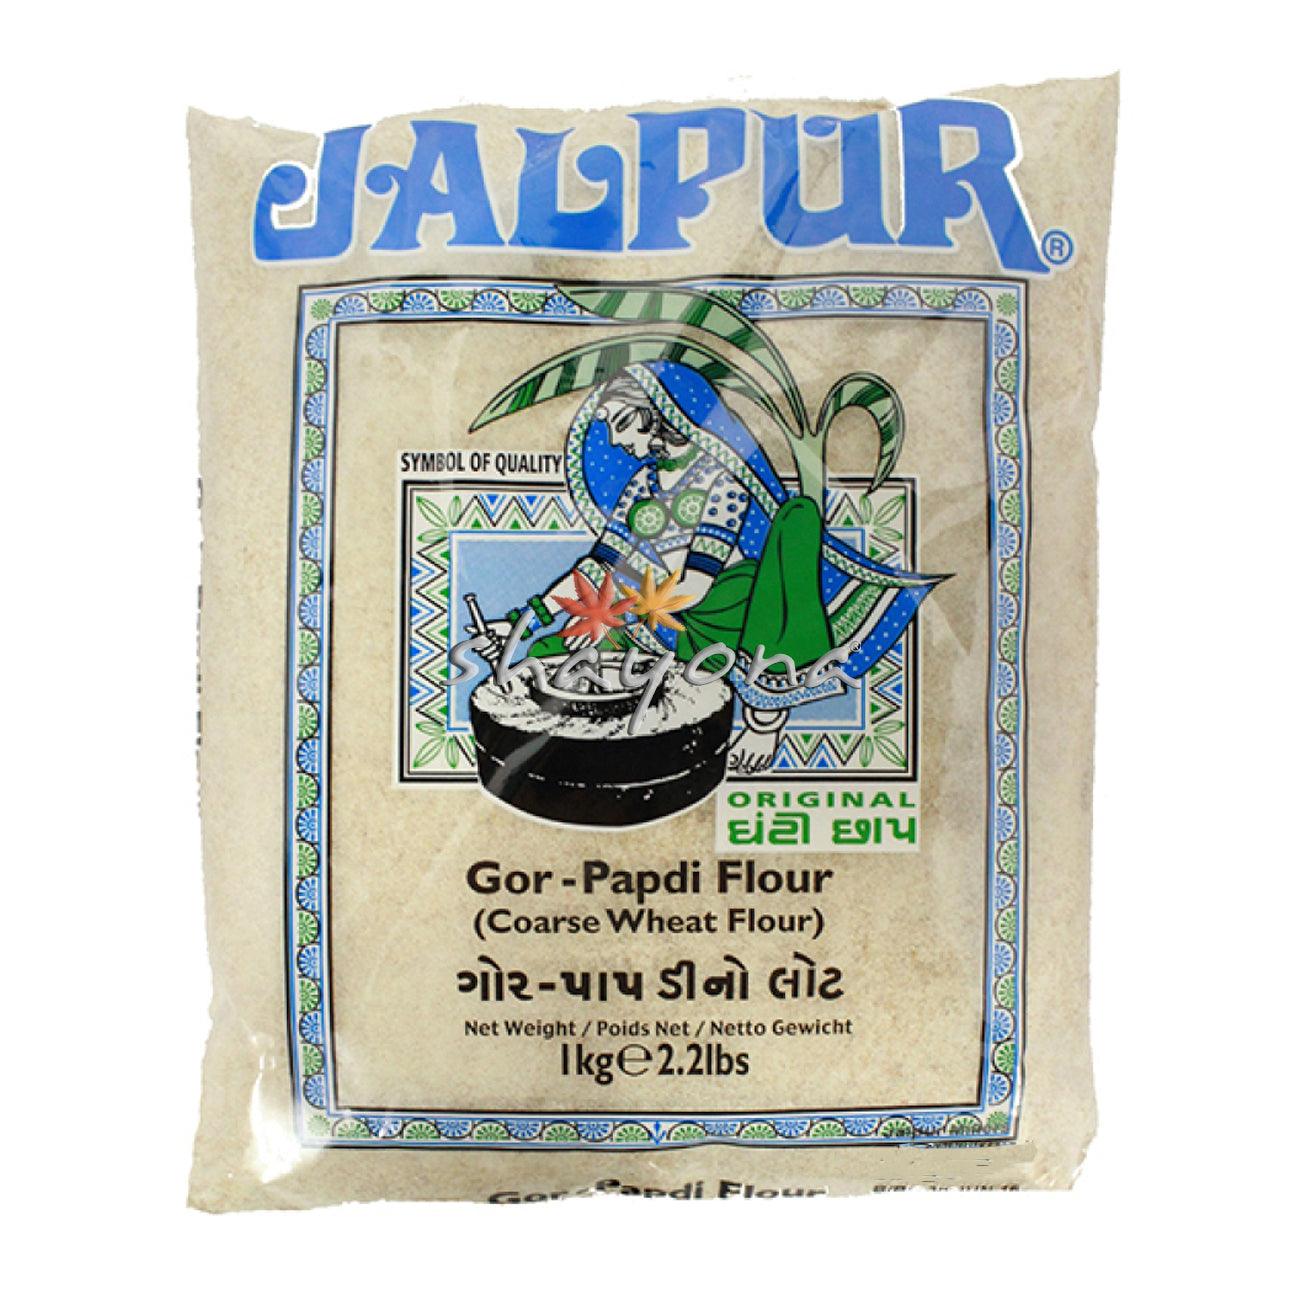 Jalpur Gor Papdi Flour - Shayona UK